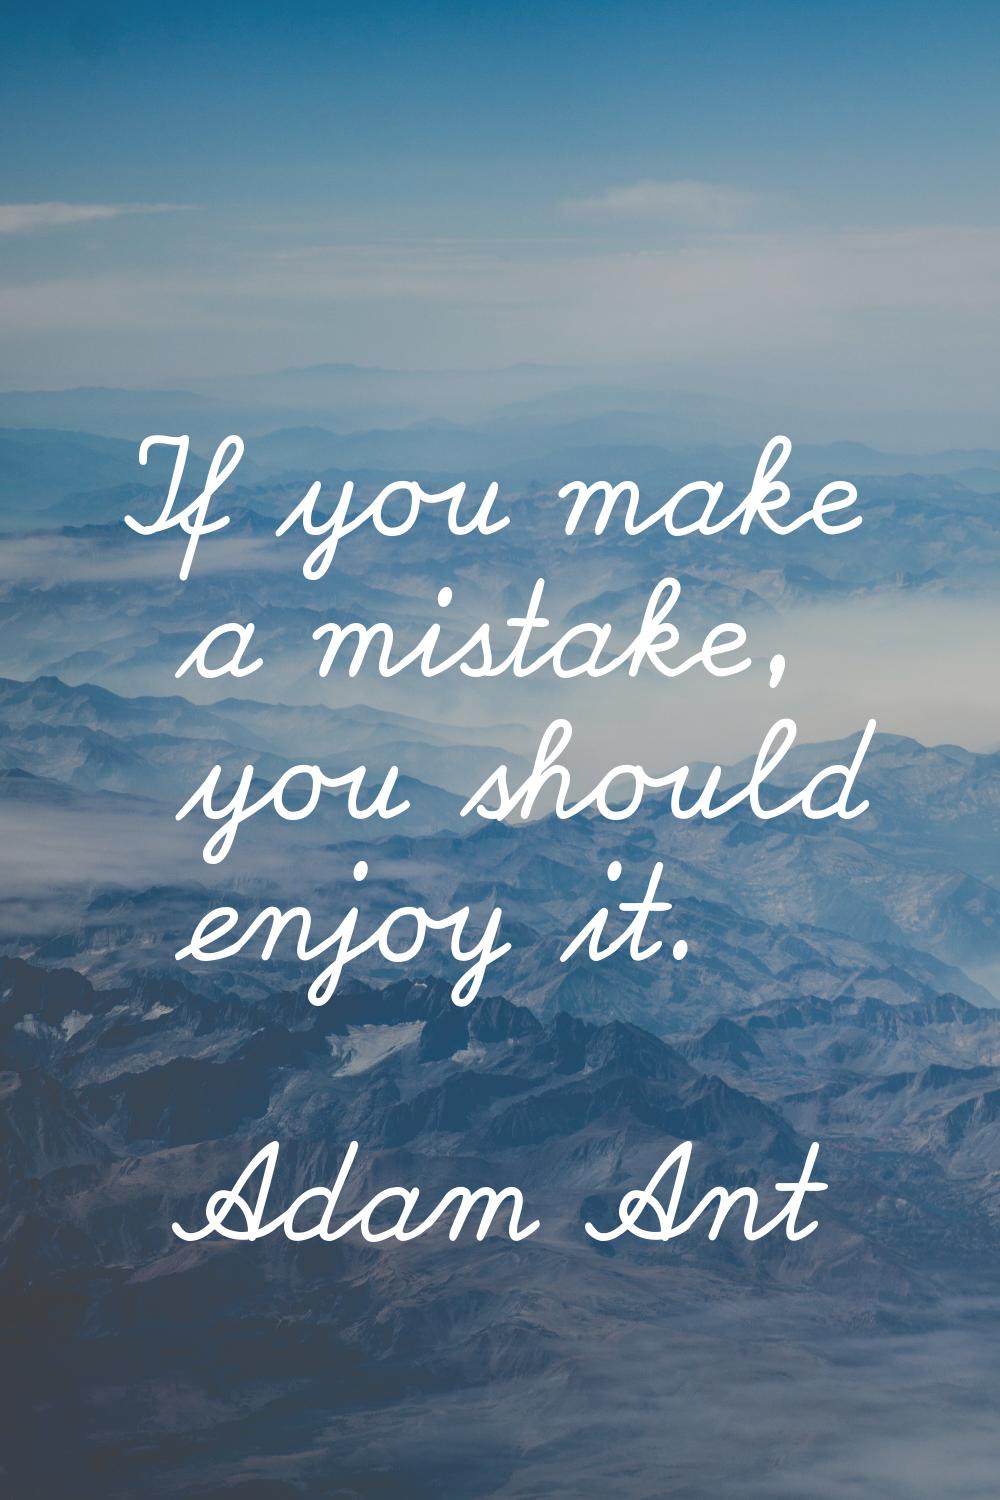 If you make a mistake, you should enjoy it.